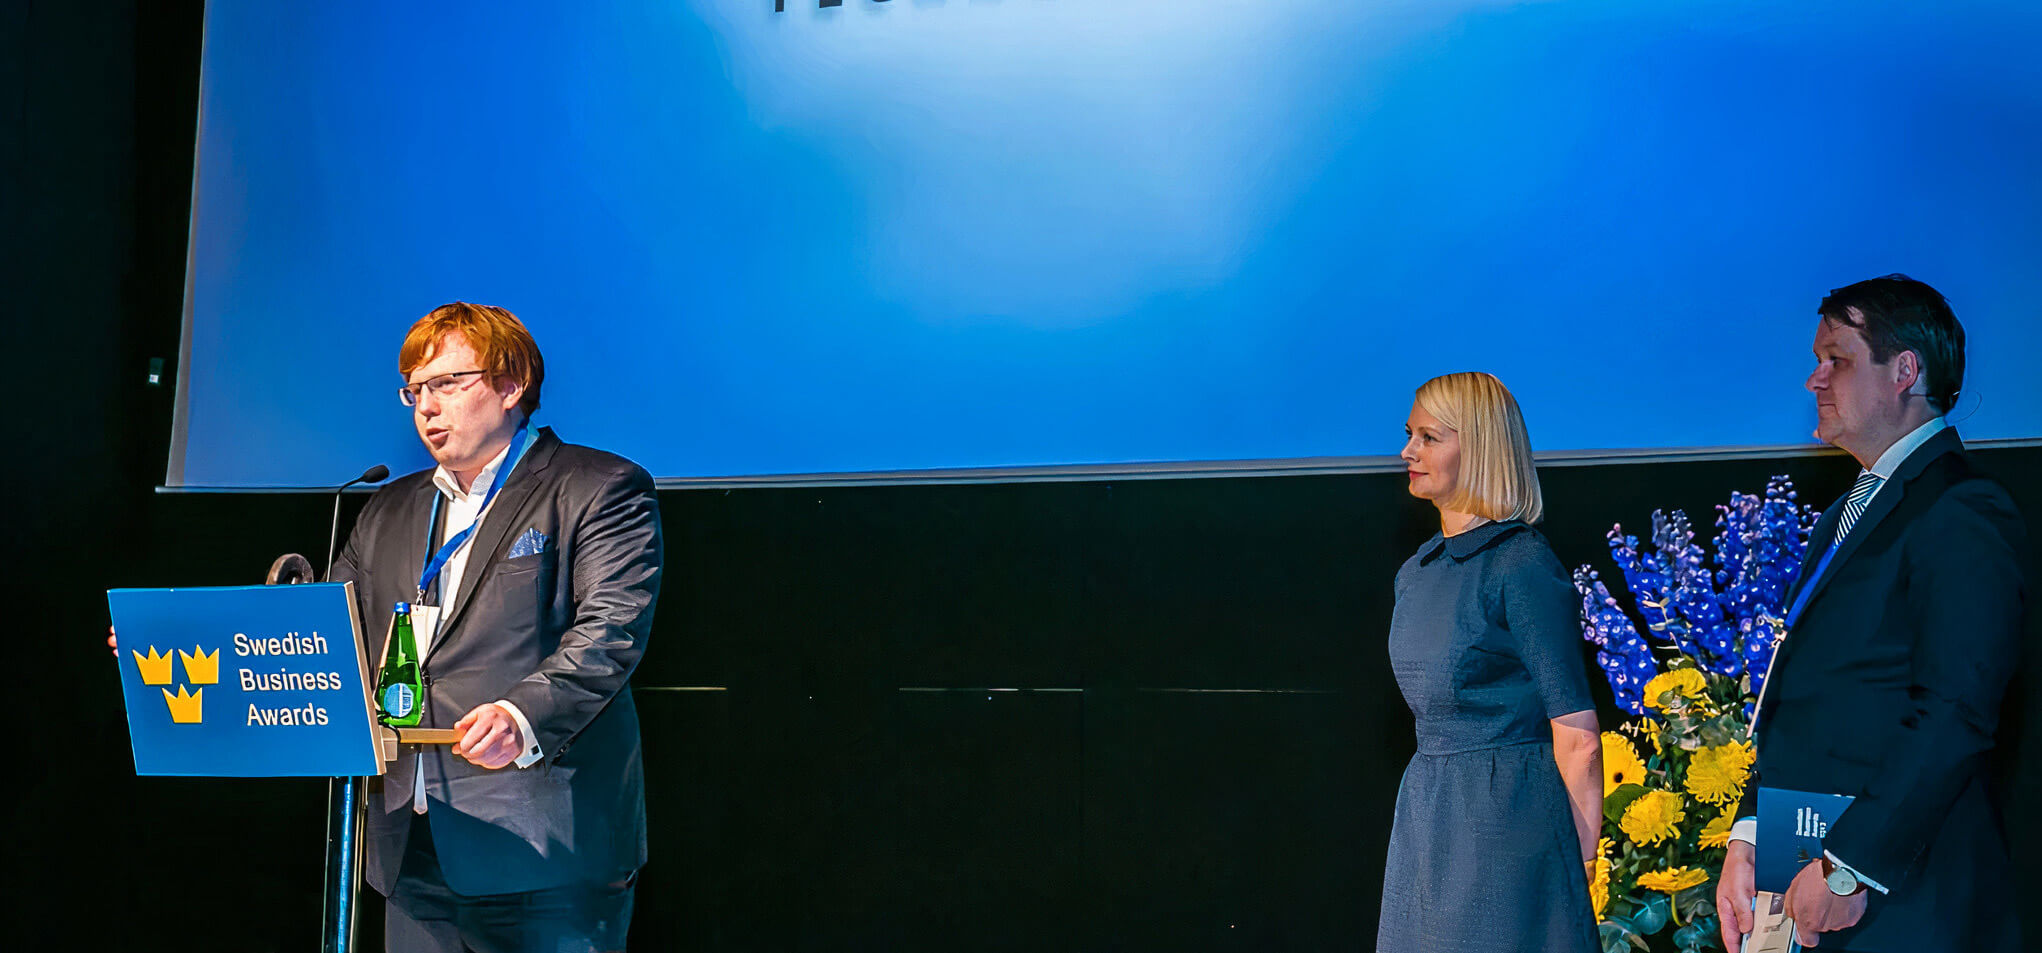 Skeleton is winner of Swedish Business Awards 2015 in Estonia